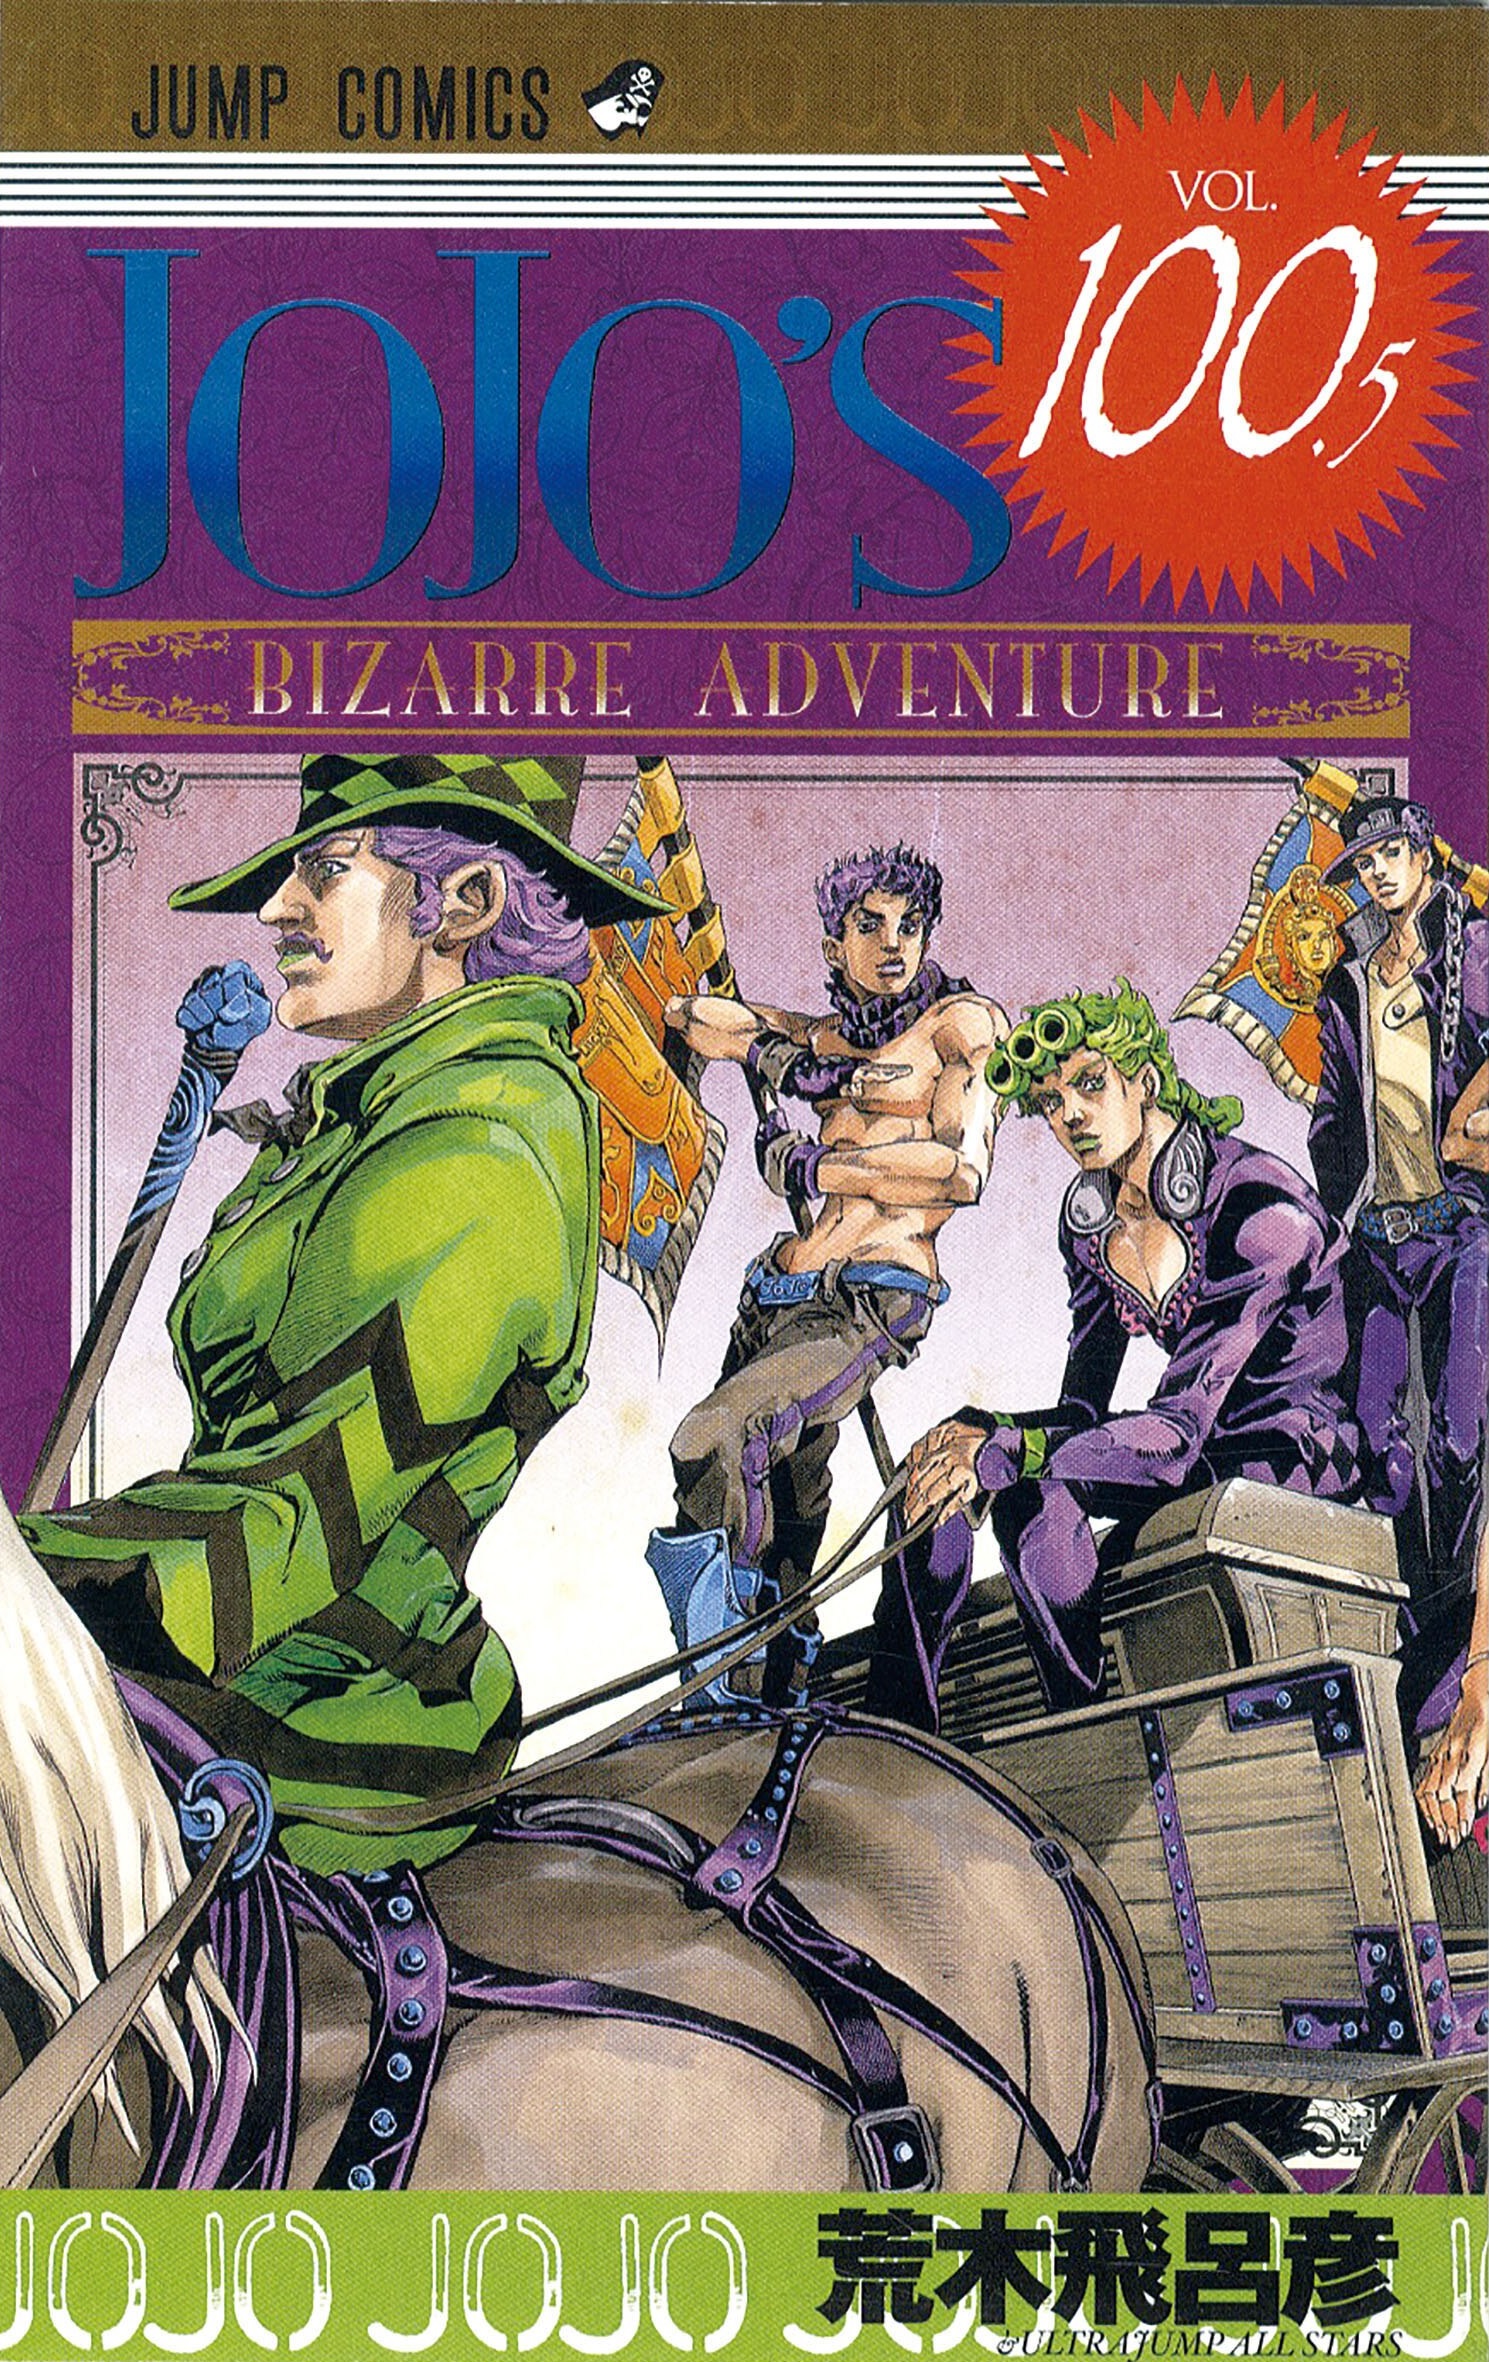 download jojos bizarre adventure manga e book